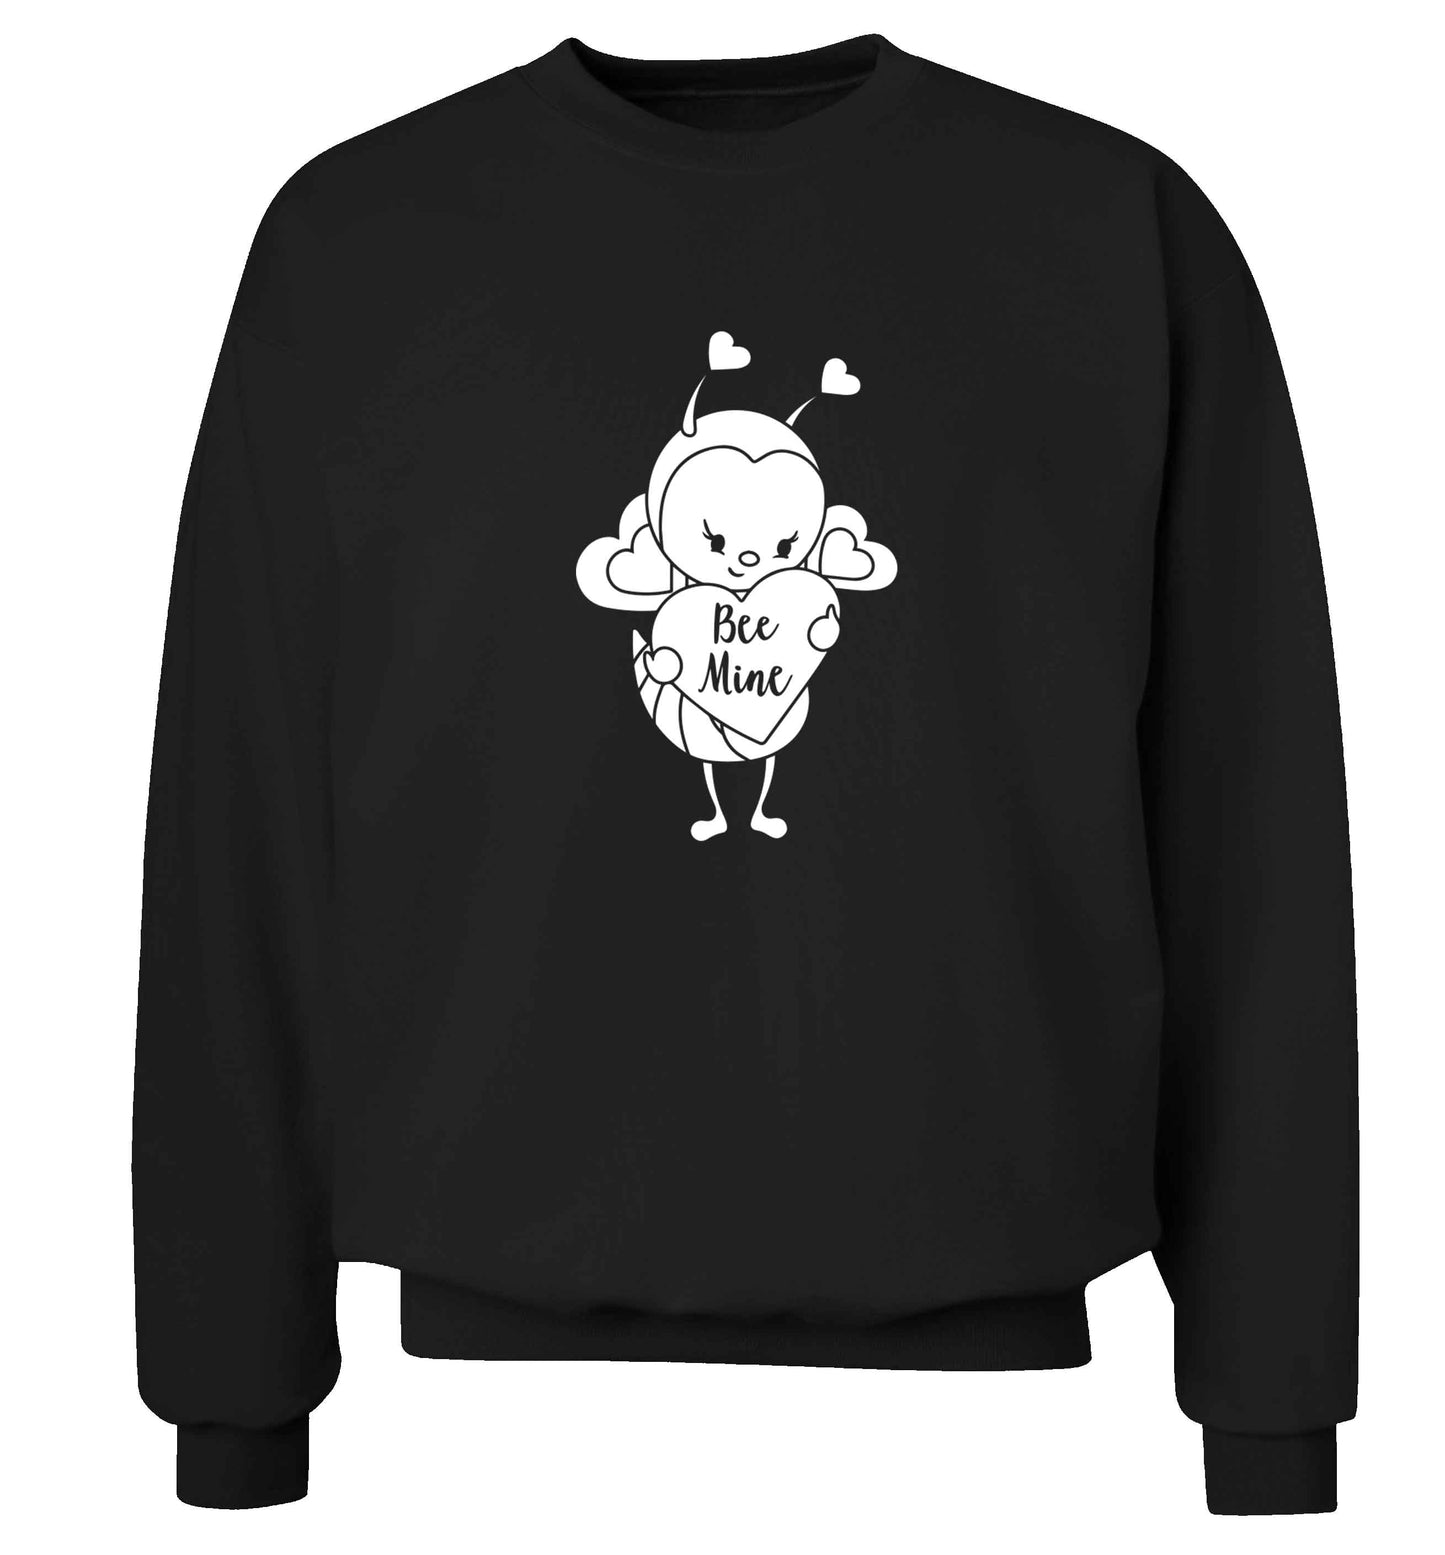 Bee mine adult's unisex black sweater 2XL